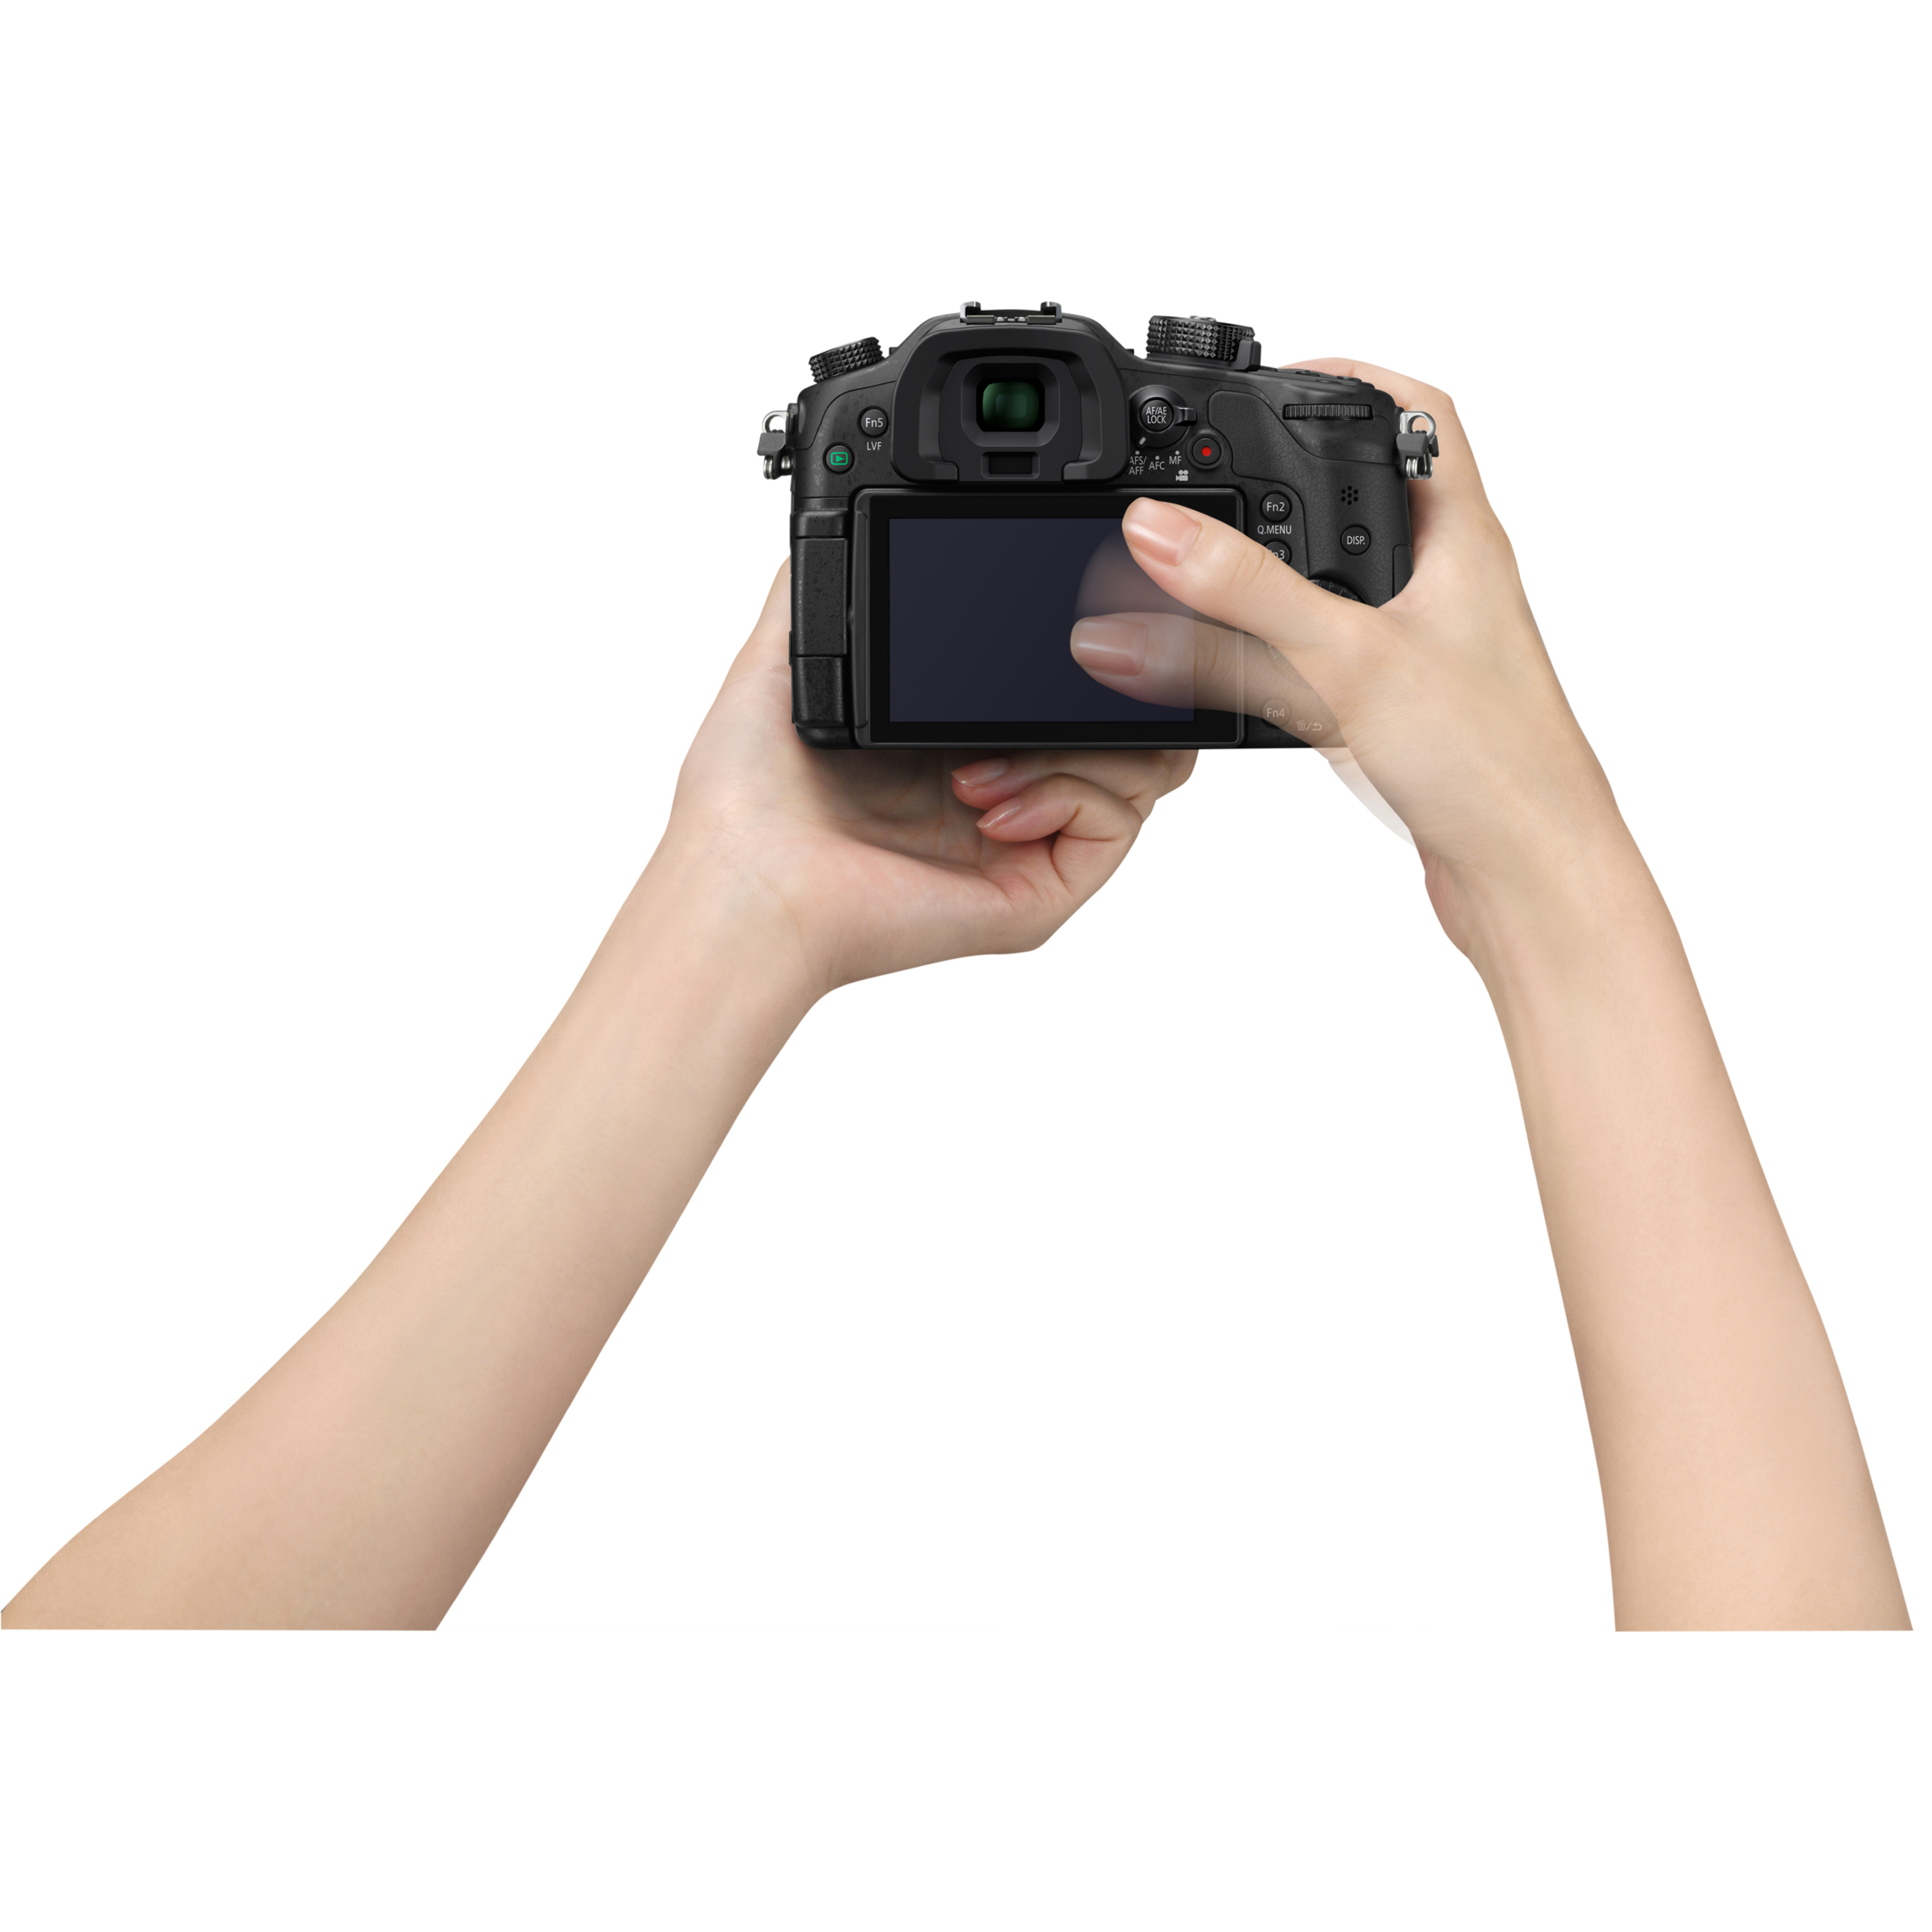 Panasonic Lumix DMC-GH4 16.1 Megapixel Mirrorless Camera with Lens, Black - image 4 of 7